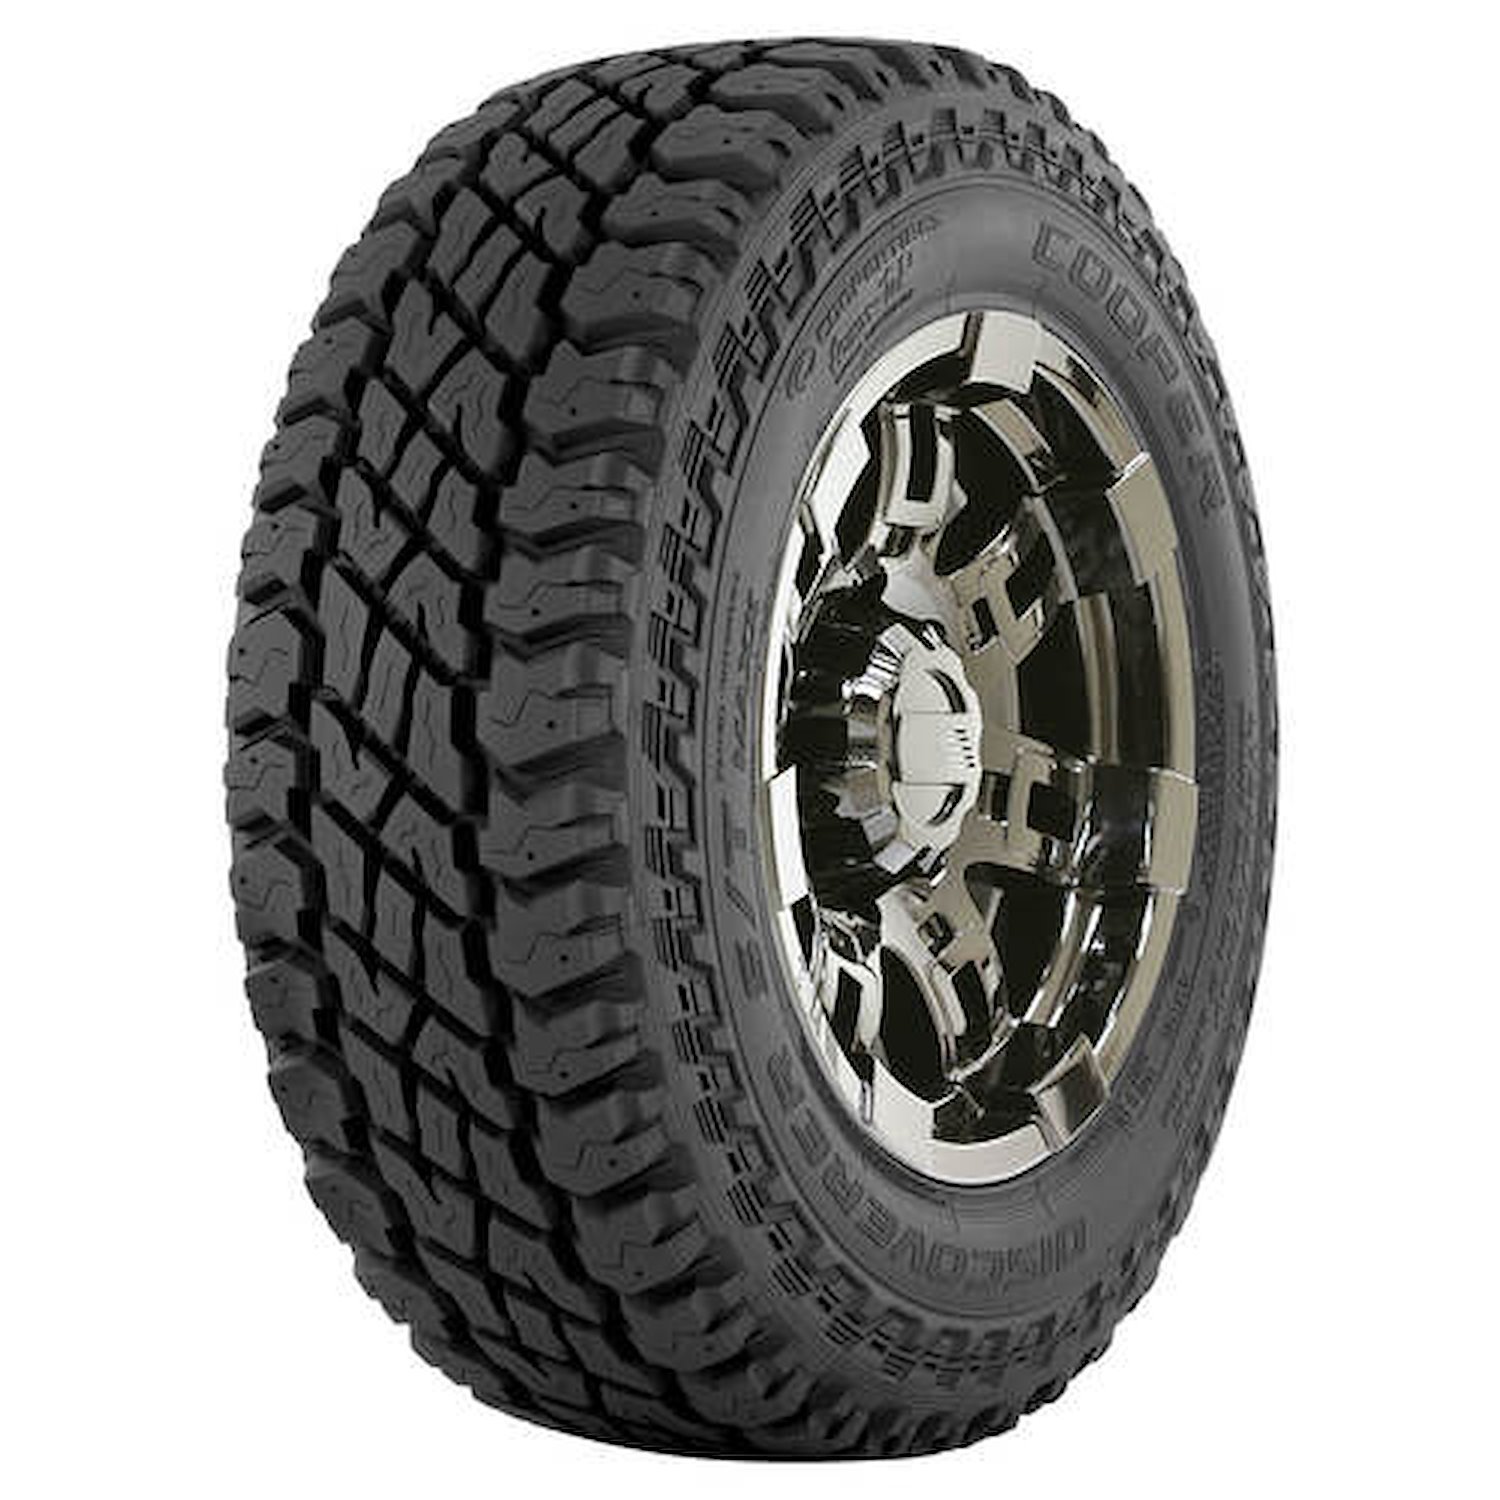 Discoverer S/T Maxx All-Terrain Tire, LT285/65R18